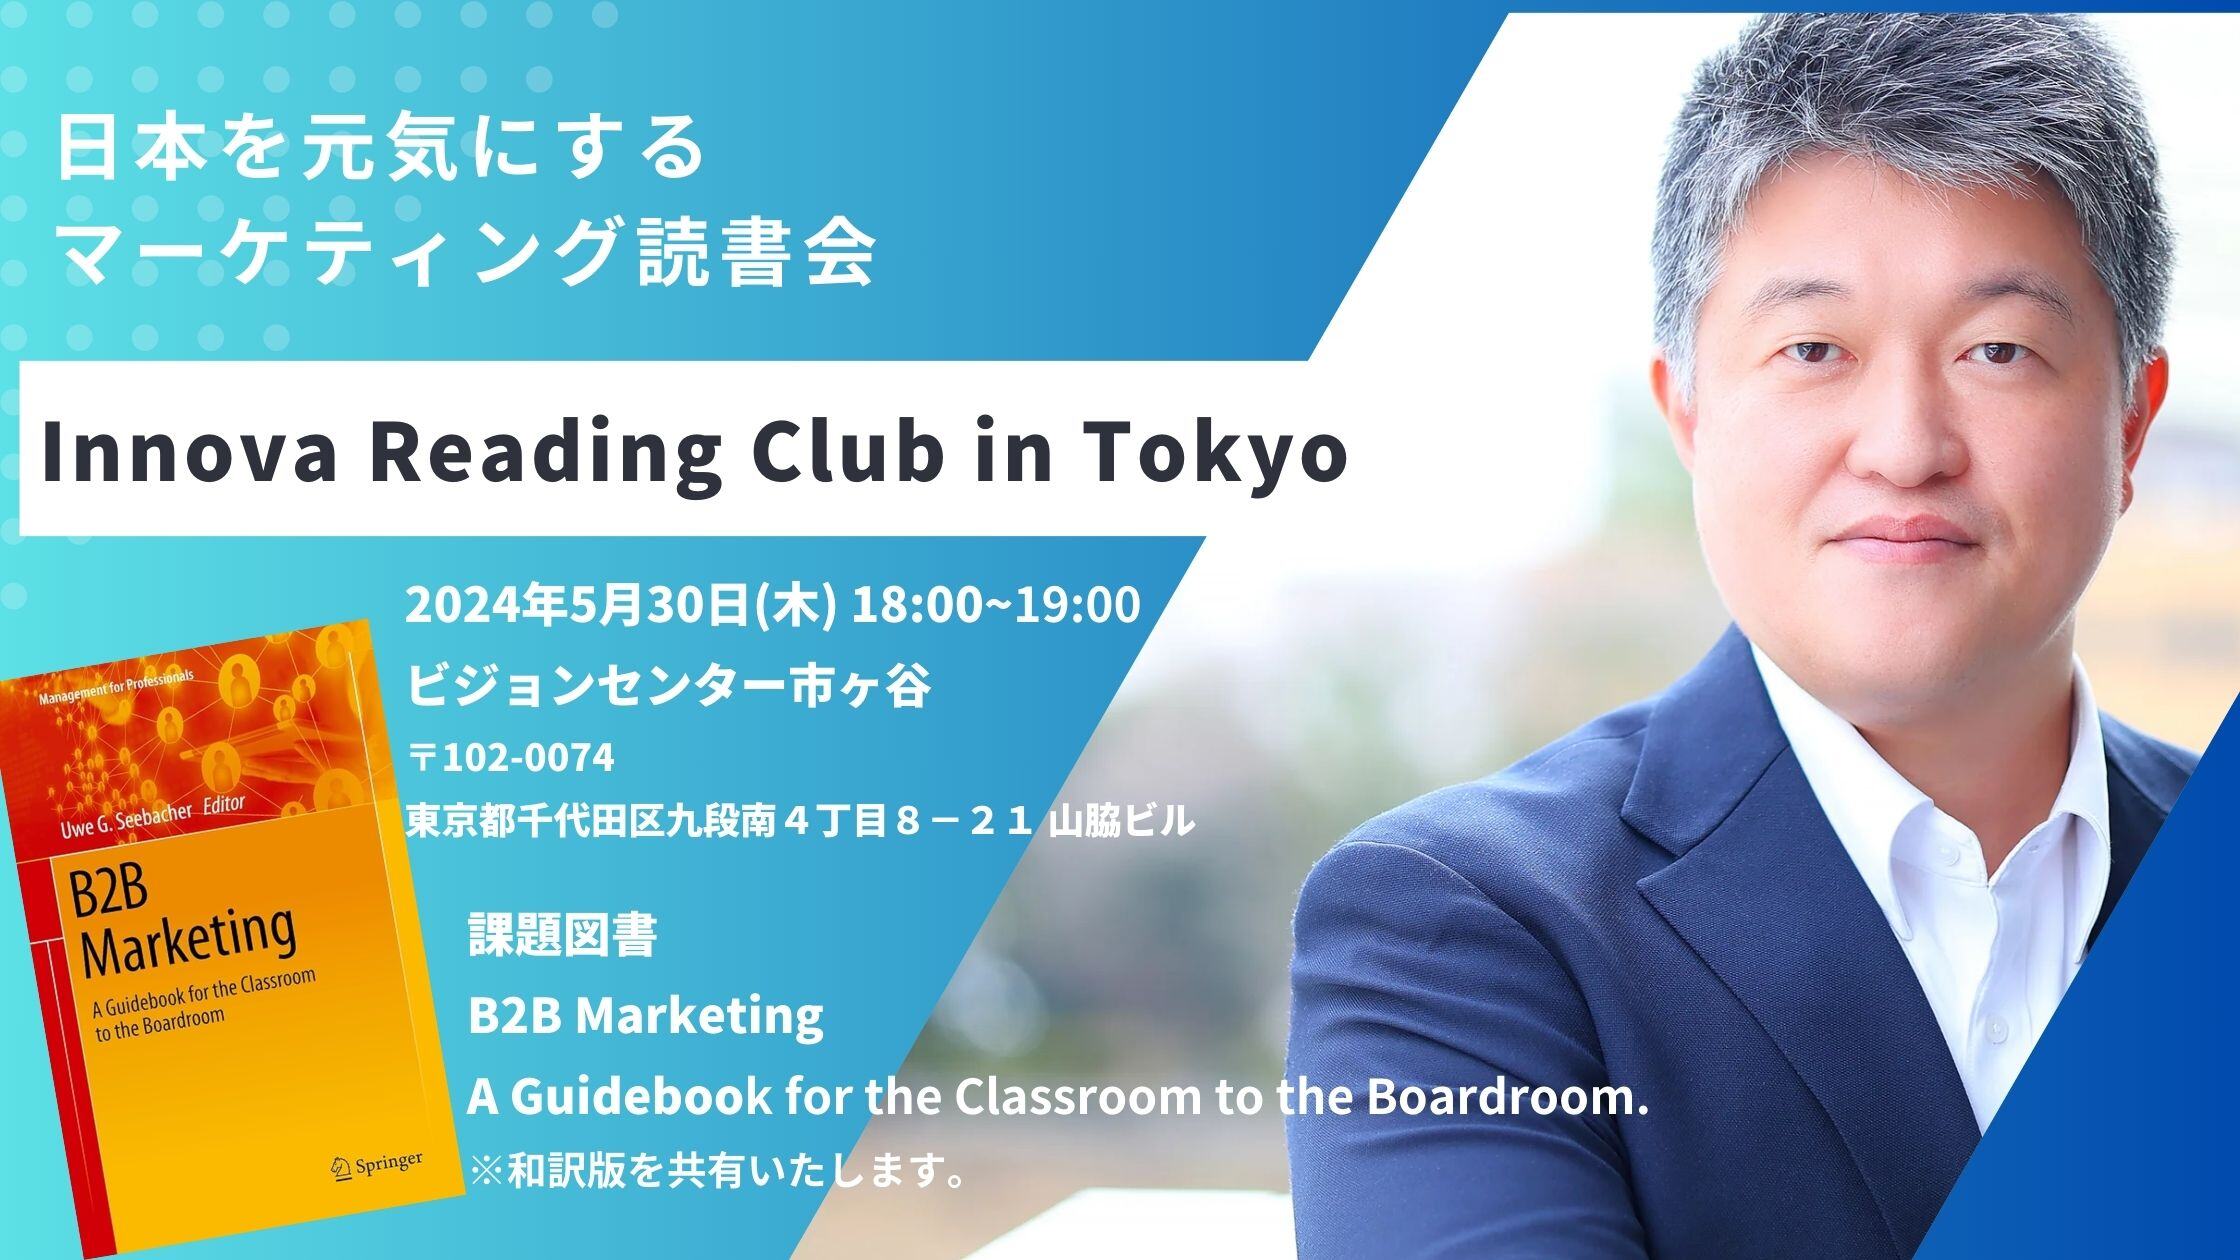 2405 Innova Reading Club Tokyo